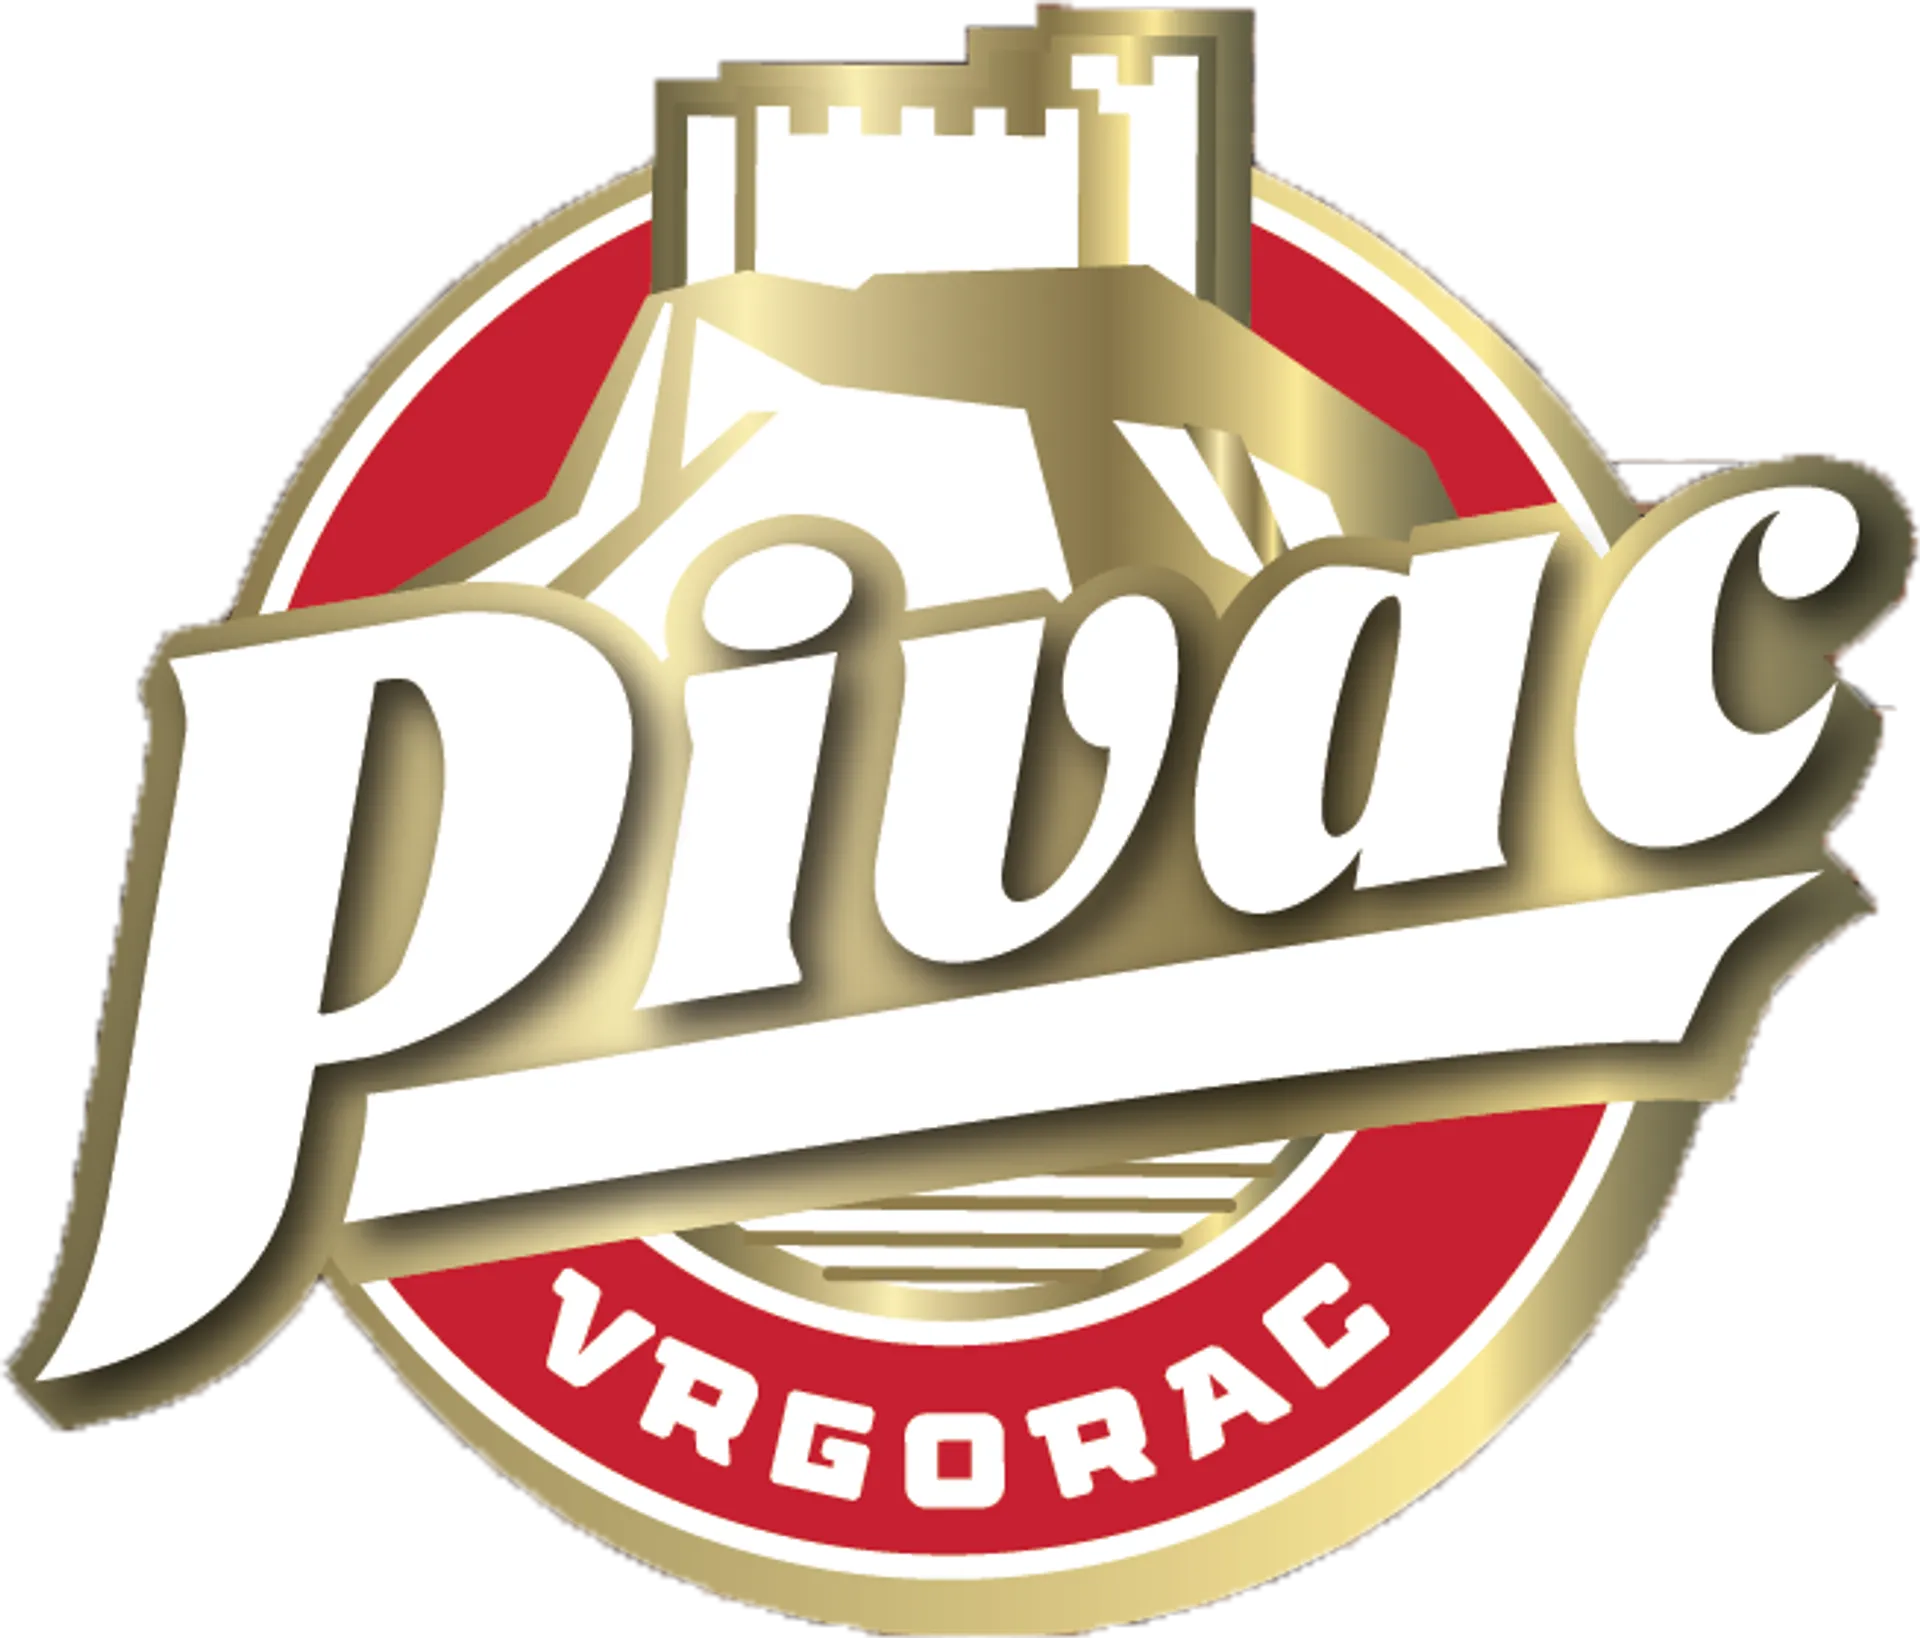 PIVAC logo